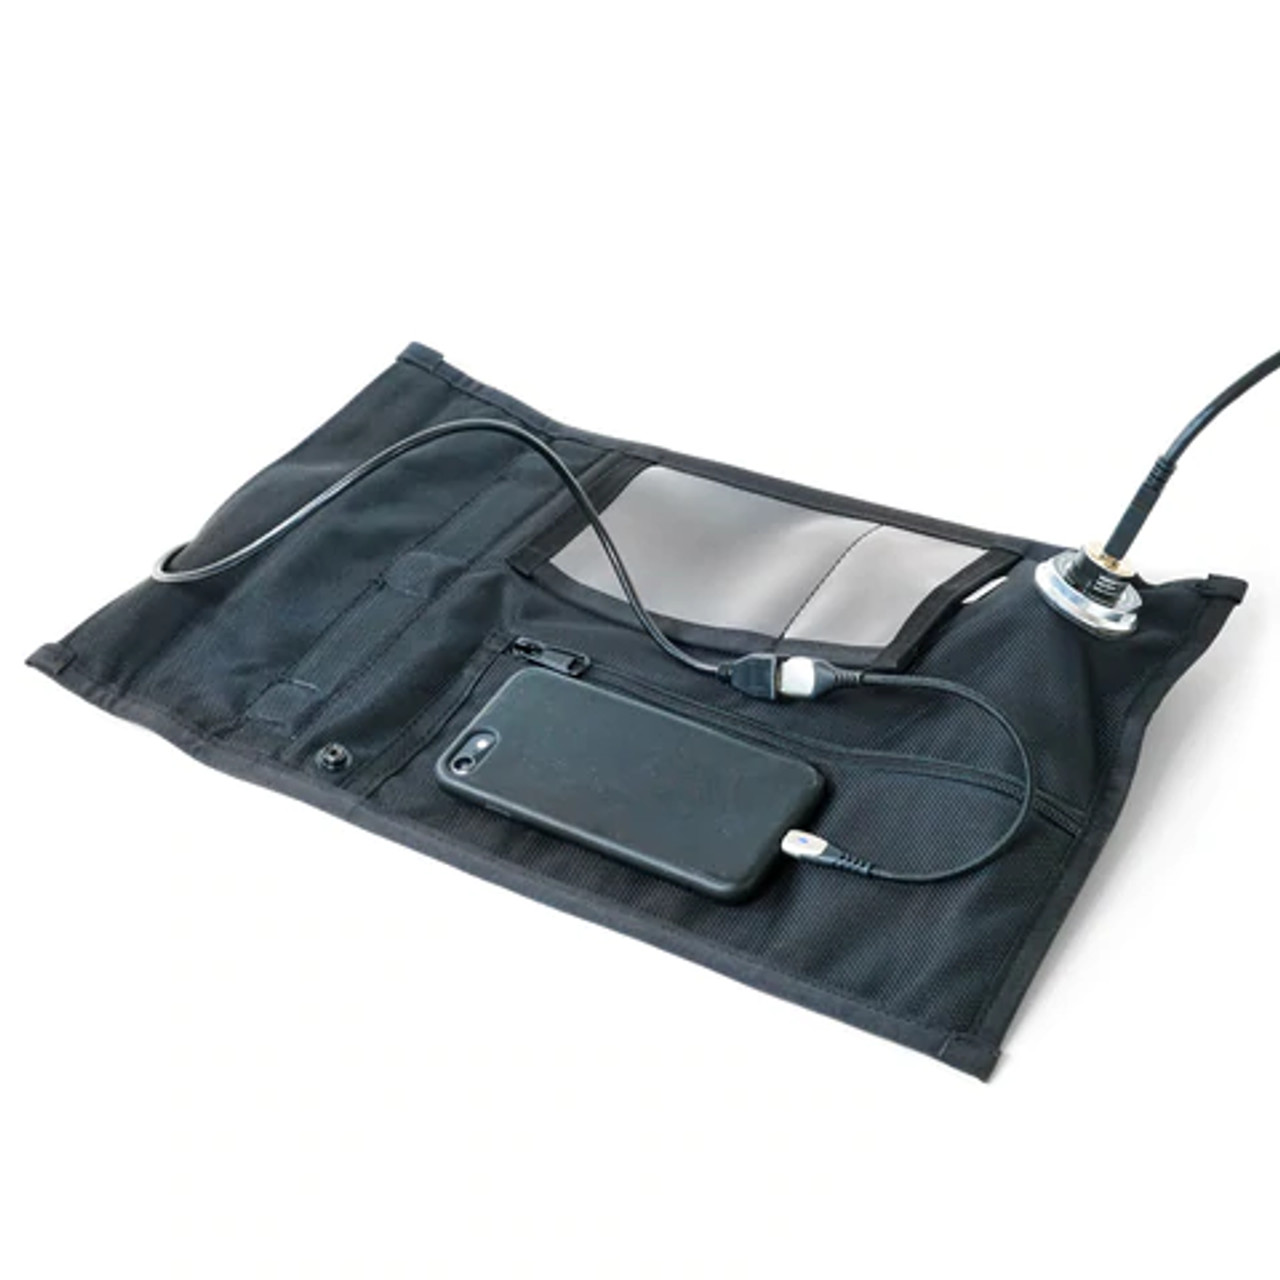 Phone Shield - Faraday Bag 